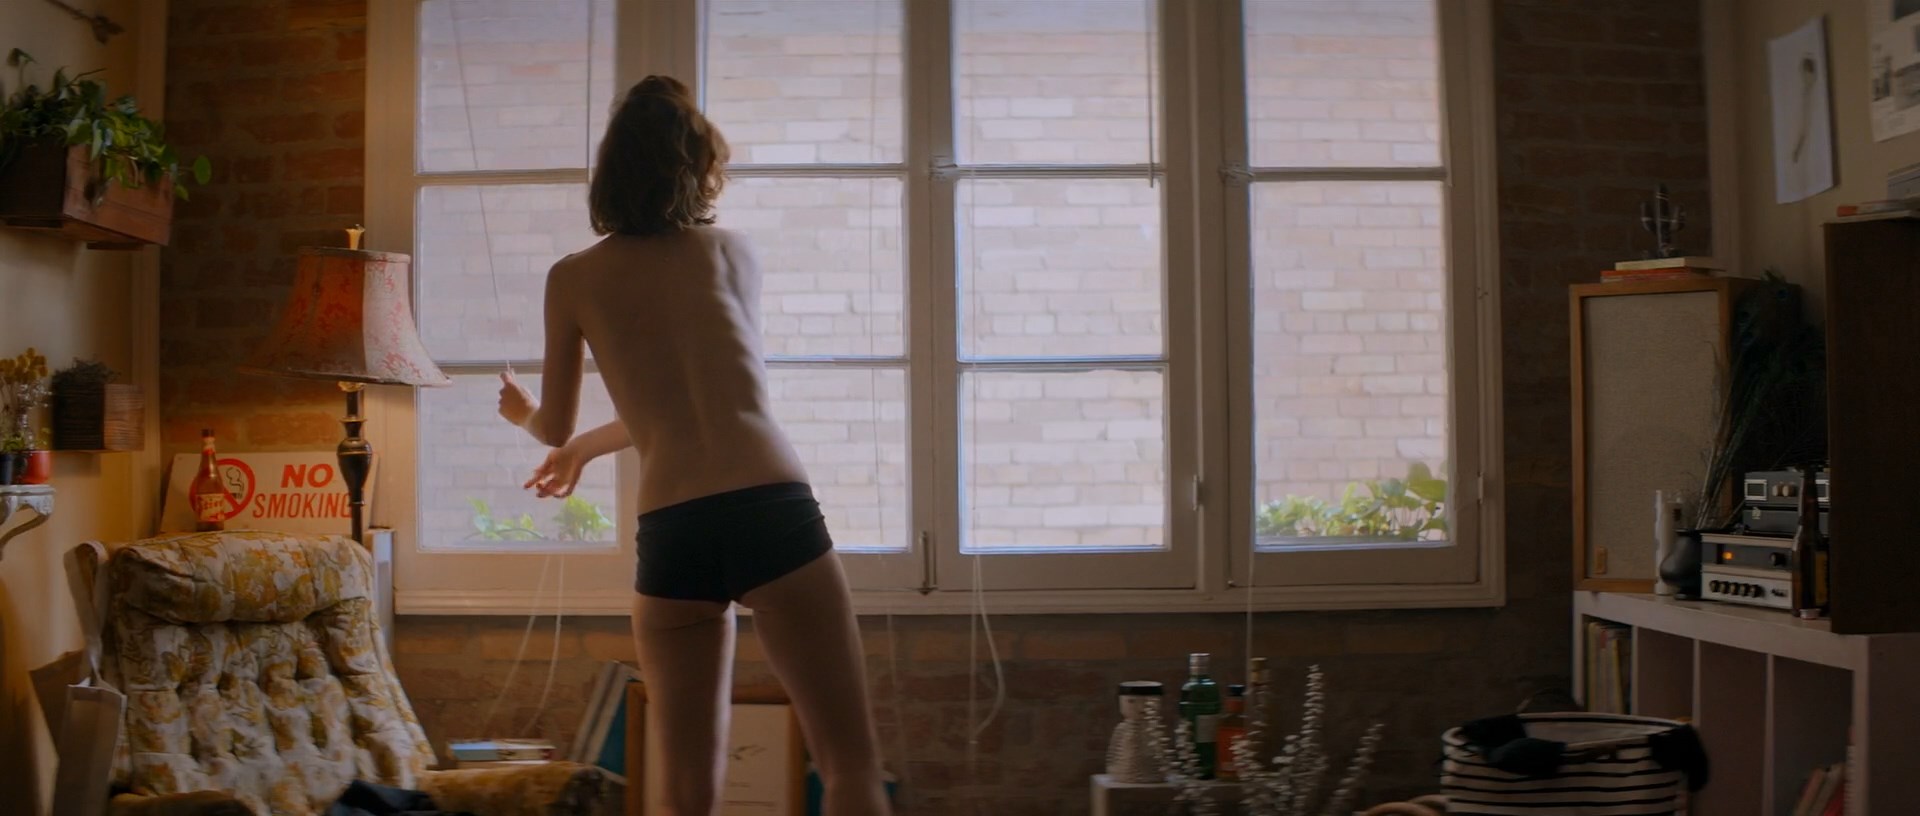 Nude Video Celebs Mary Elizabeth Winstead Nude All About Nina